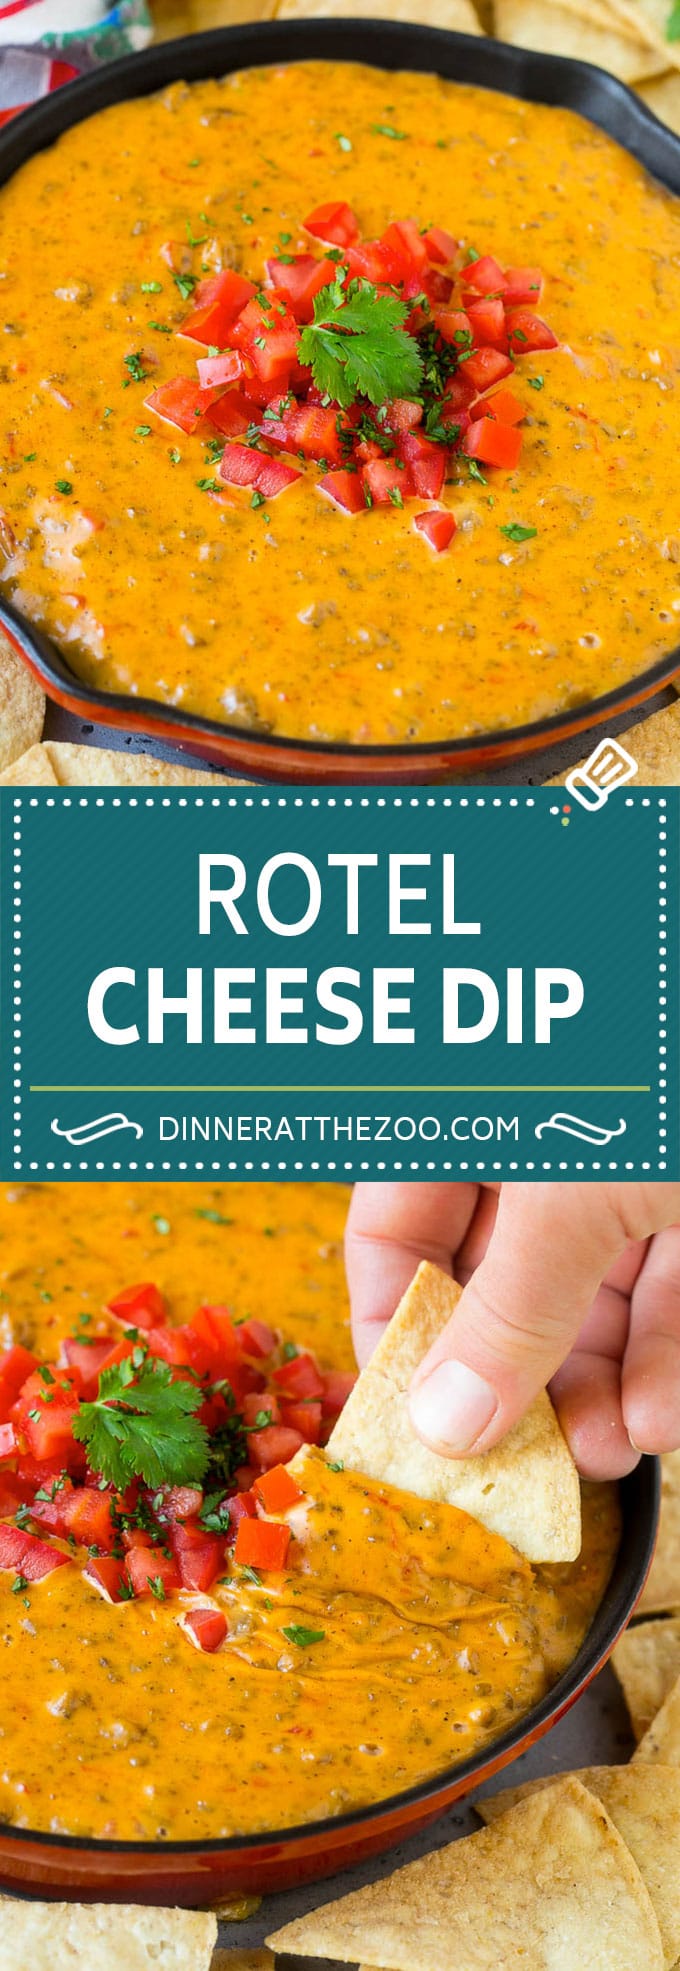 Rotel Dip Recipe | Mexican Cheese Dip | Beef and Cheese Dip | Velveeta Dip #dip #appetizer #hamburger #tomatoes #cheese #dinneratthezoo